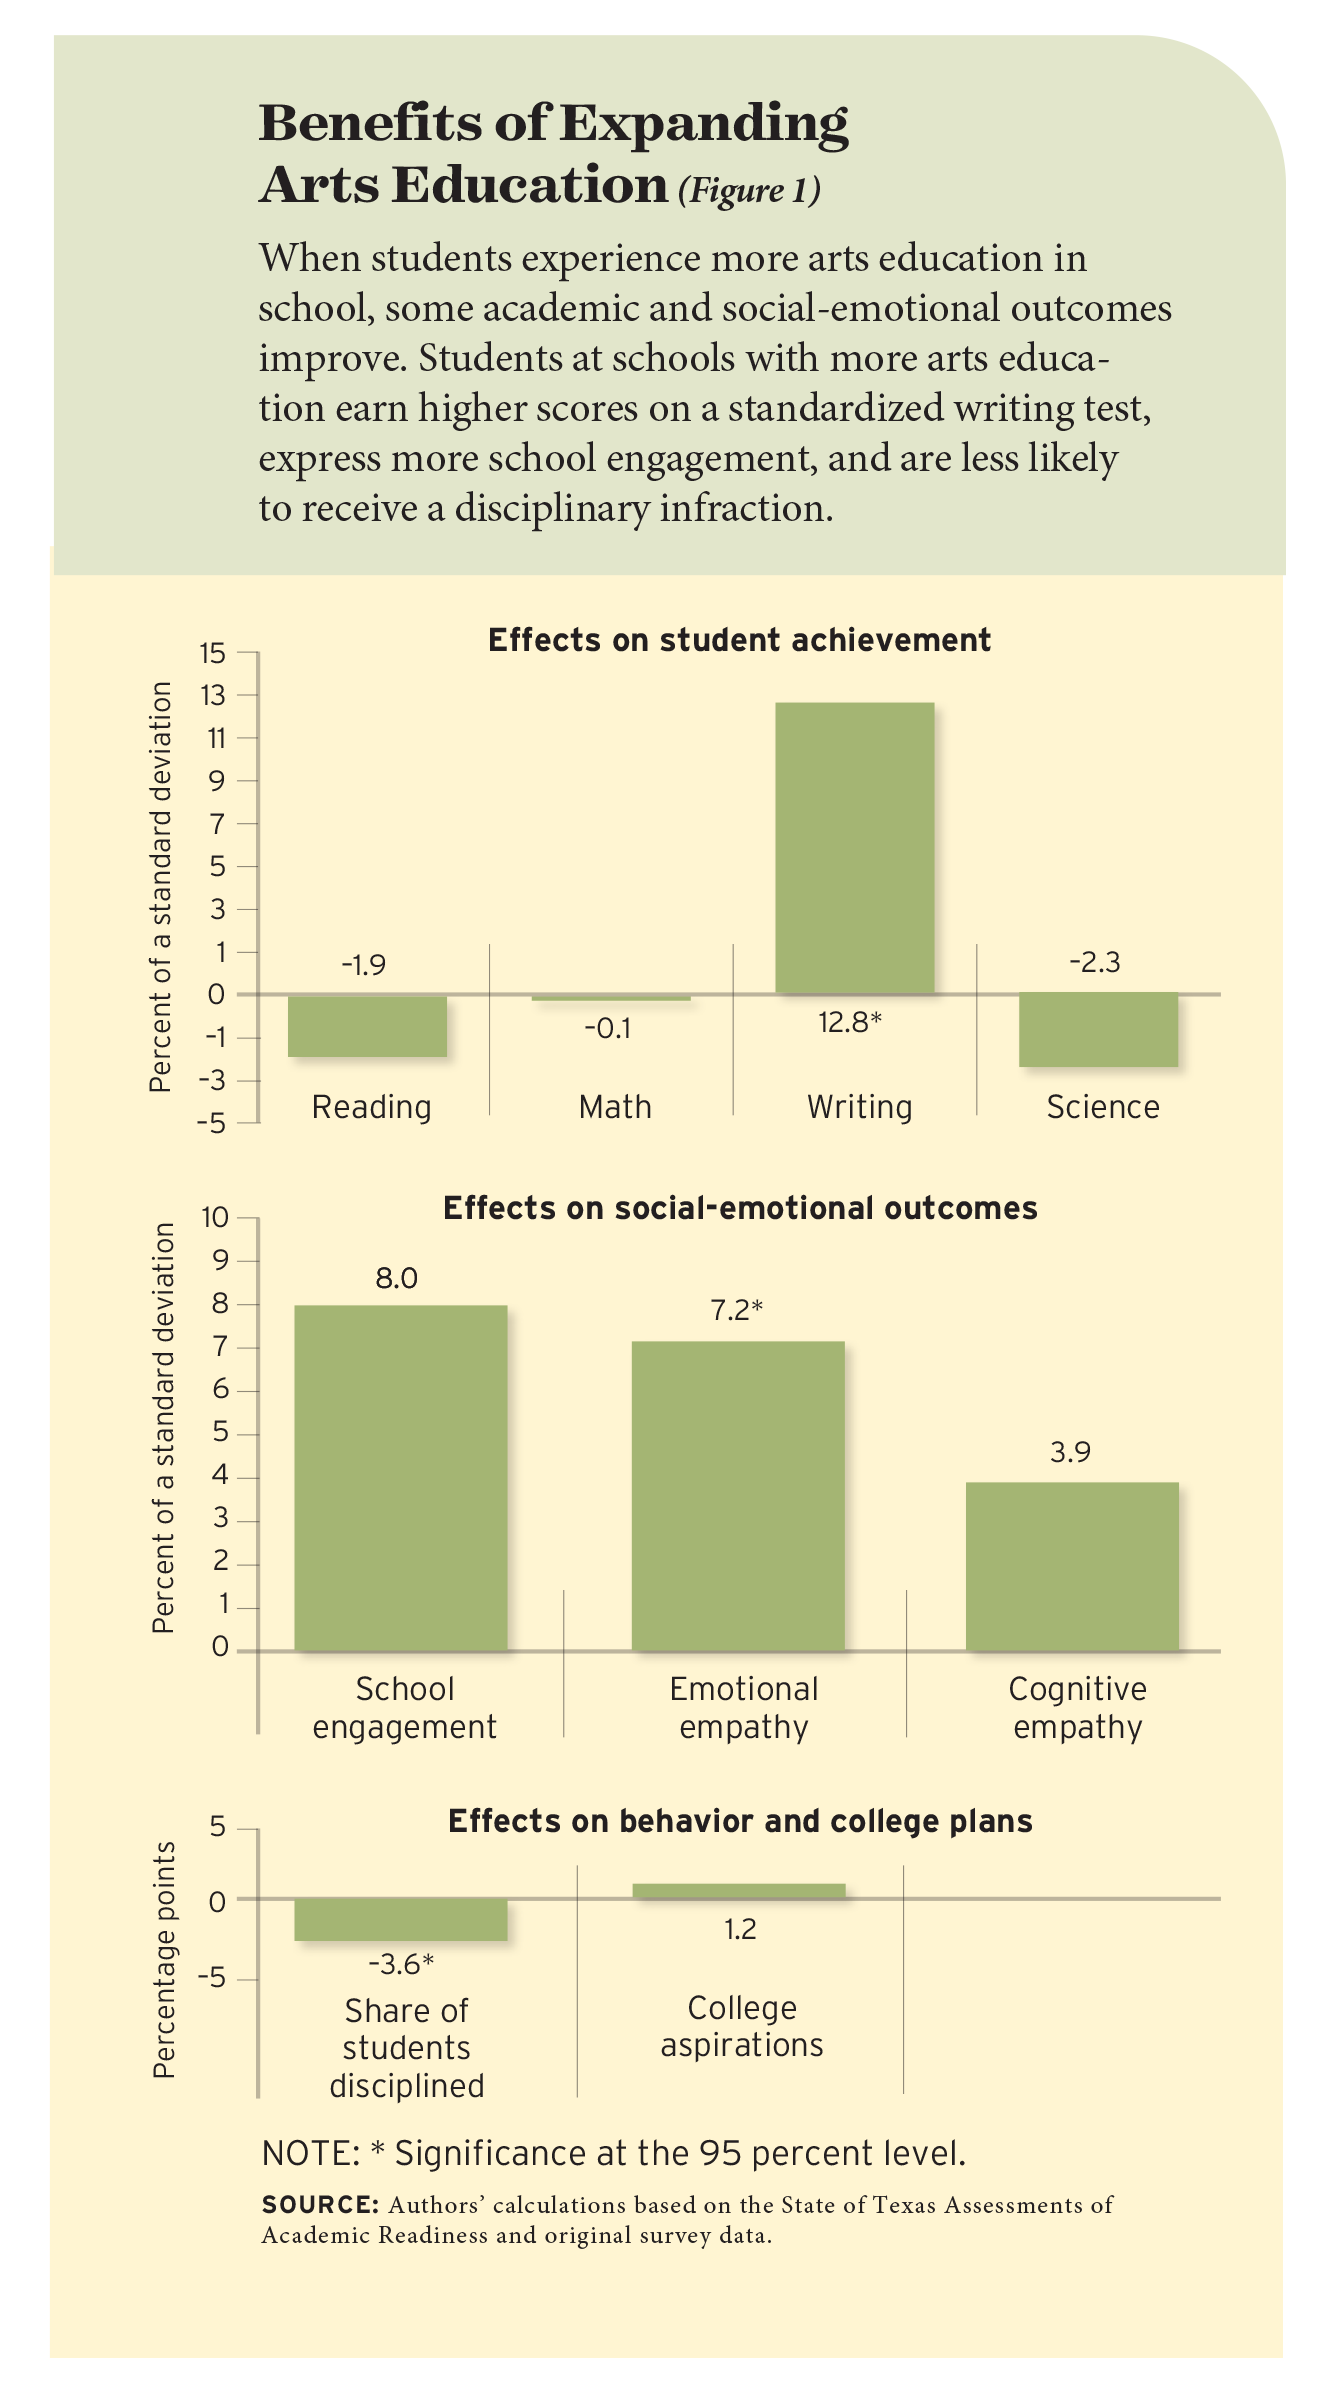 Figure 1: Benefits of Expanding Arts Education